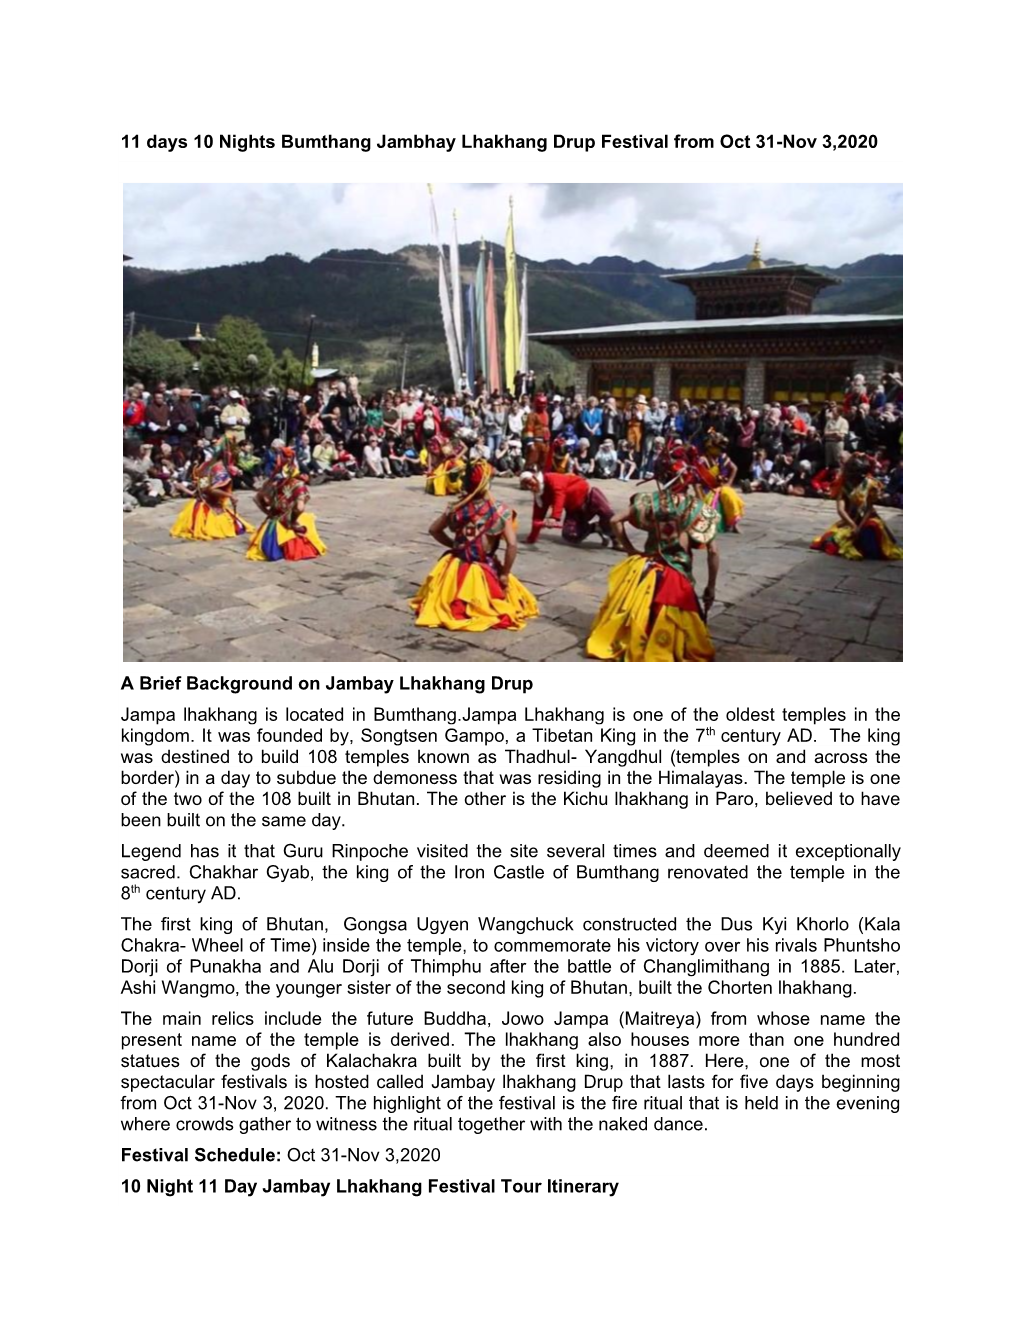 5. 11 Days 10 Nights Bumthang Jambhay Lhakhang Drup Festival